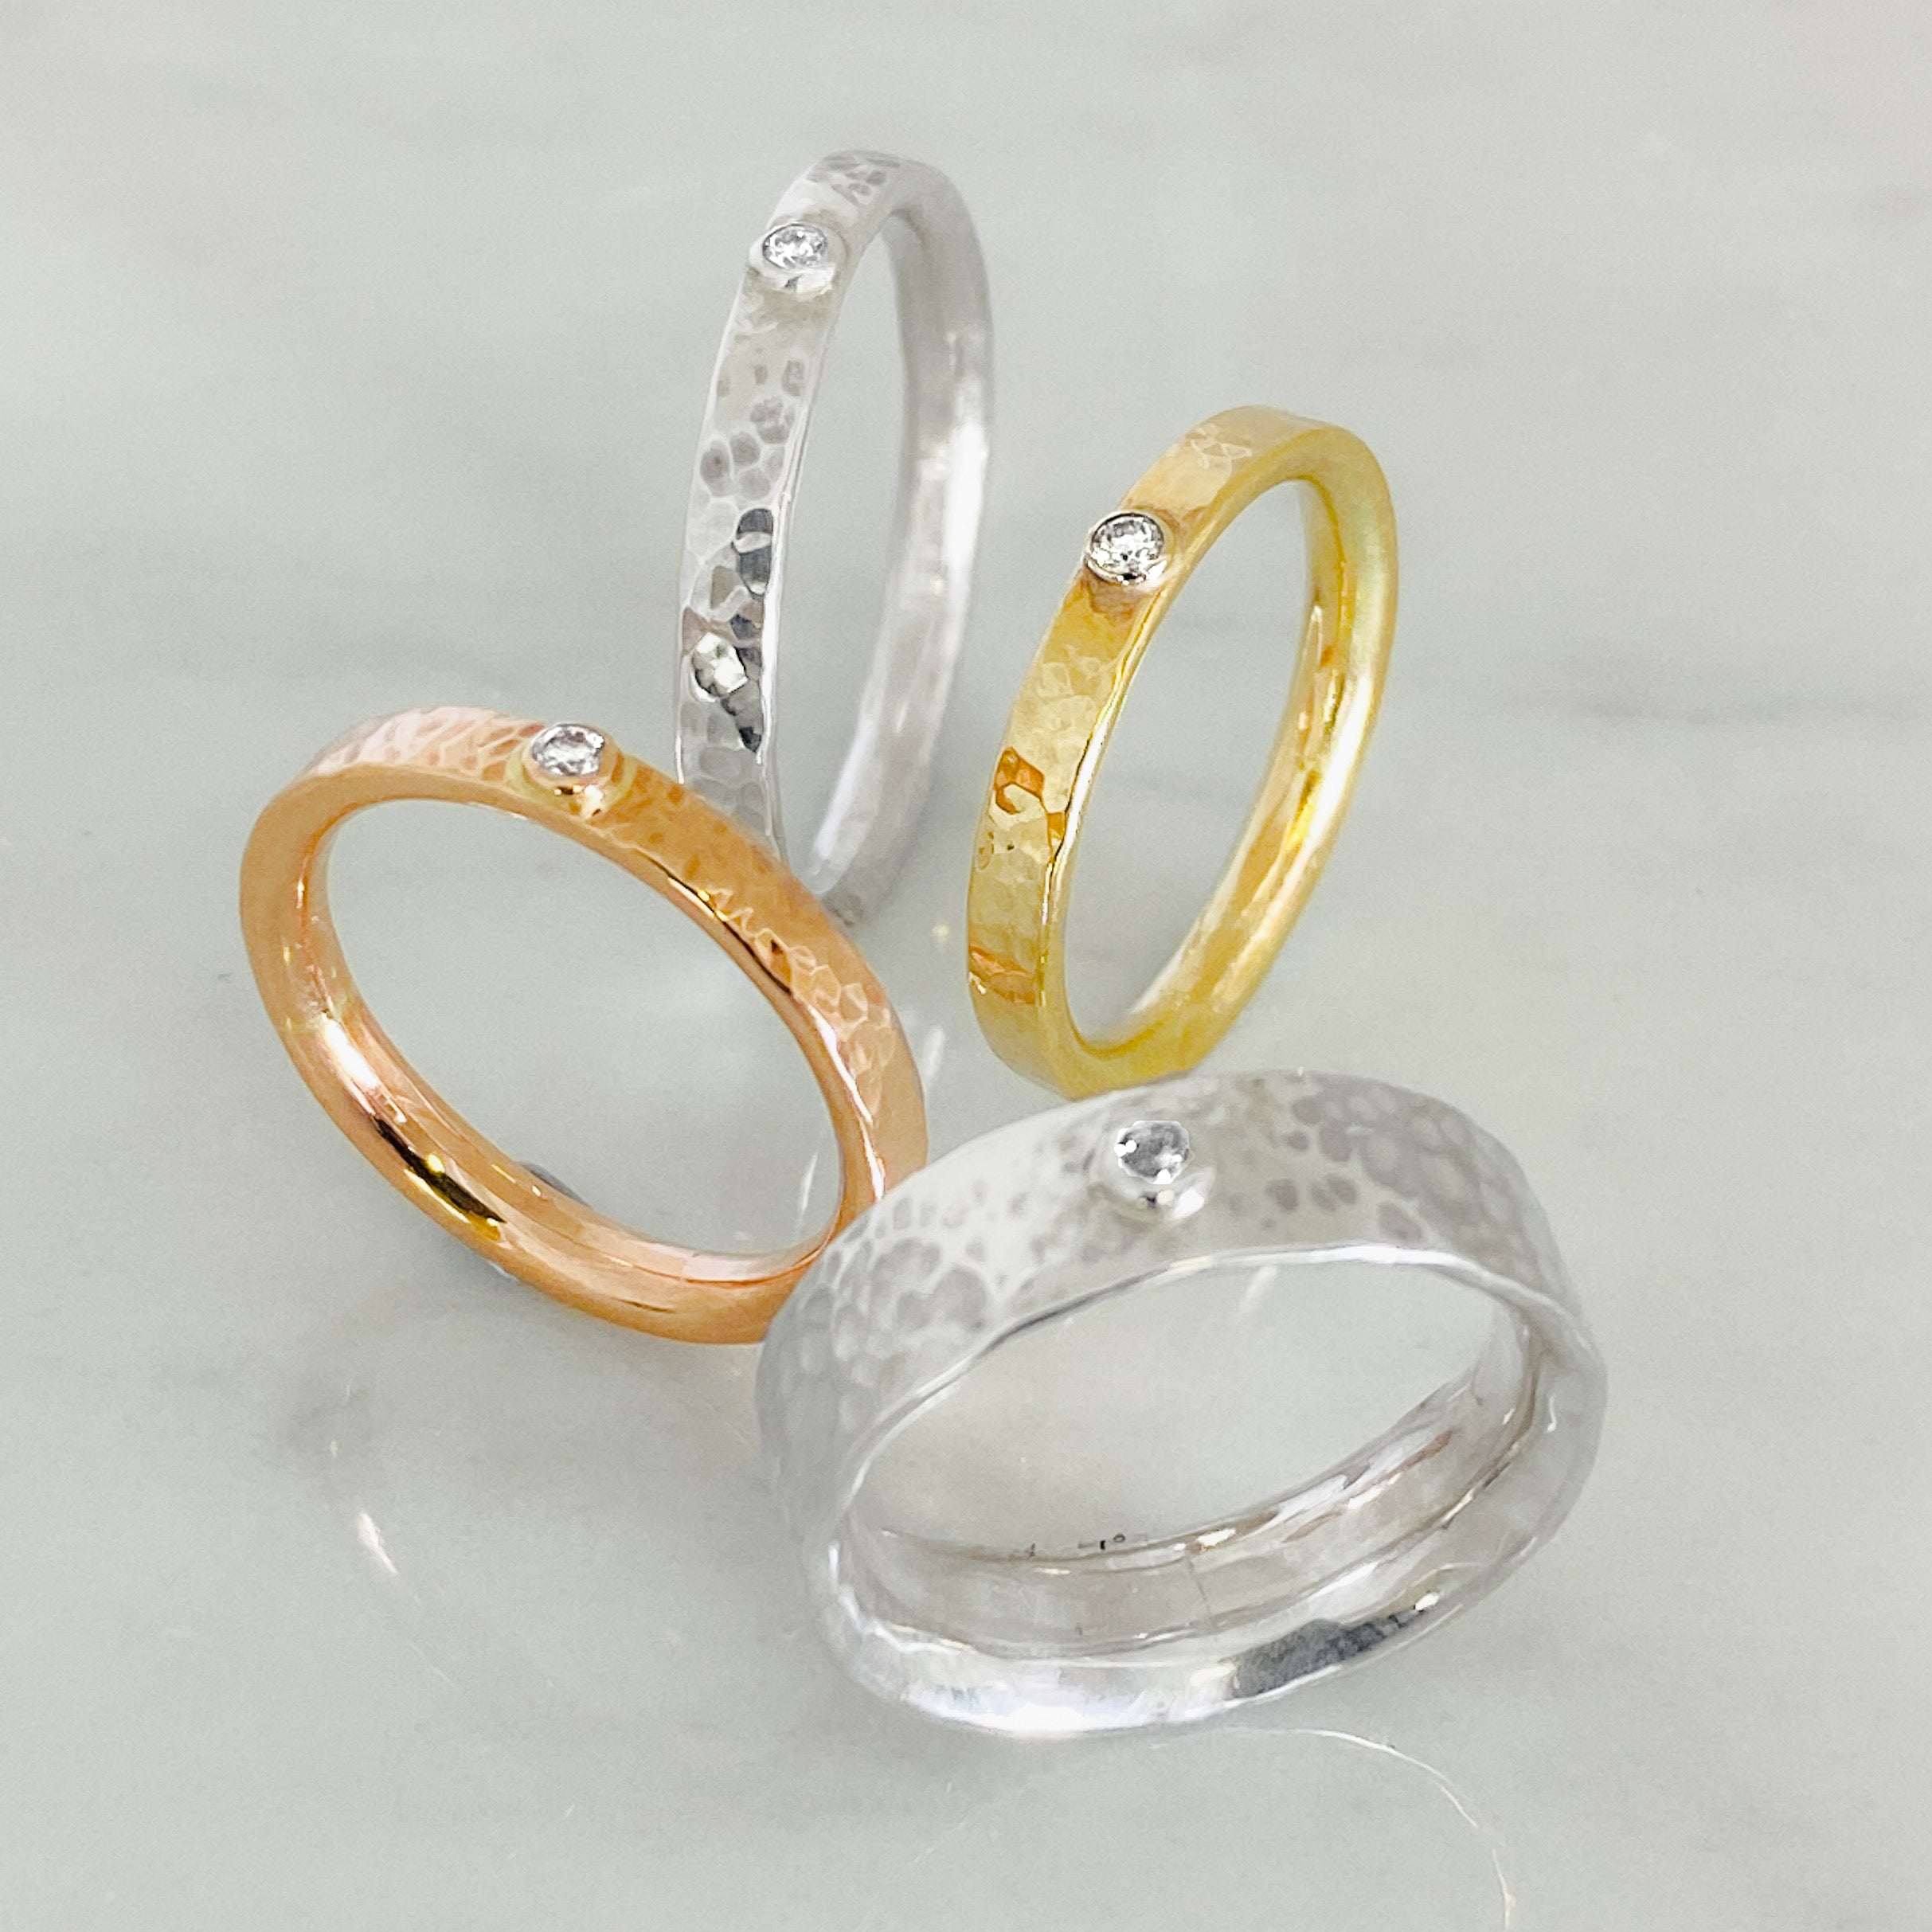 Rose Gold Diamond Dimpled Wedding Ring